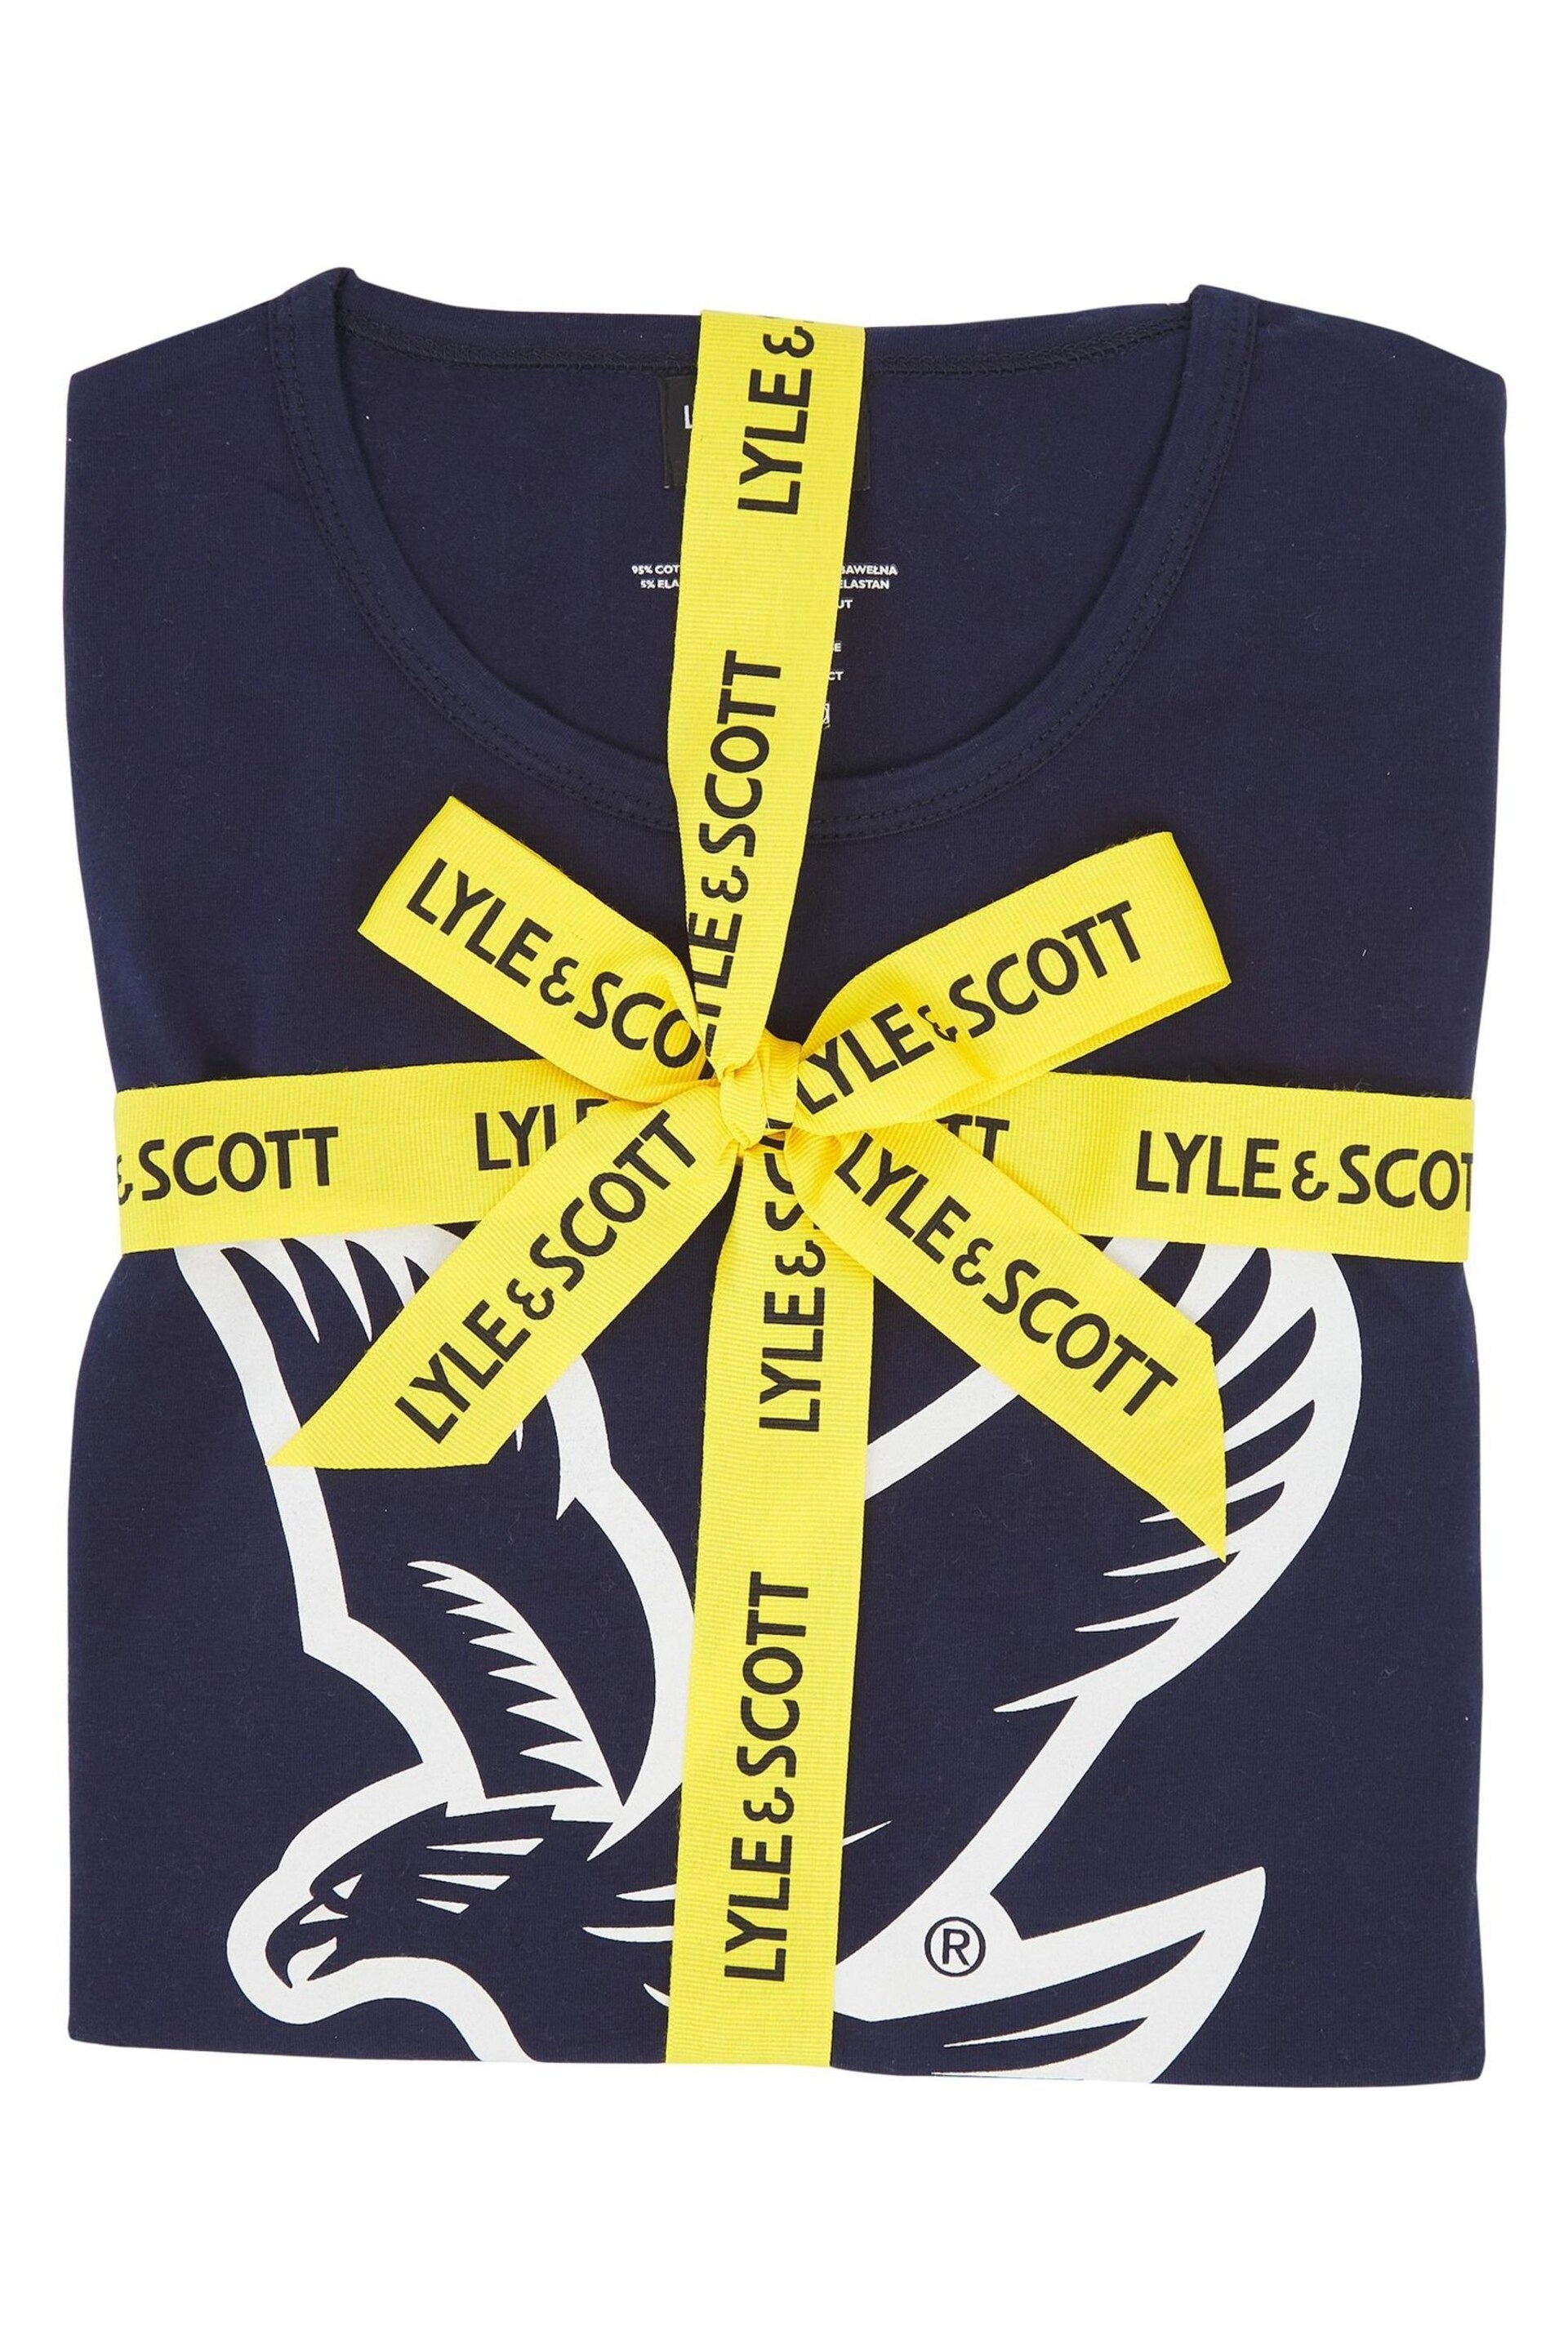 Lyle and Scott Blue Klaus T-Shirt And Short Set - Image 7 of 7